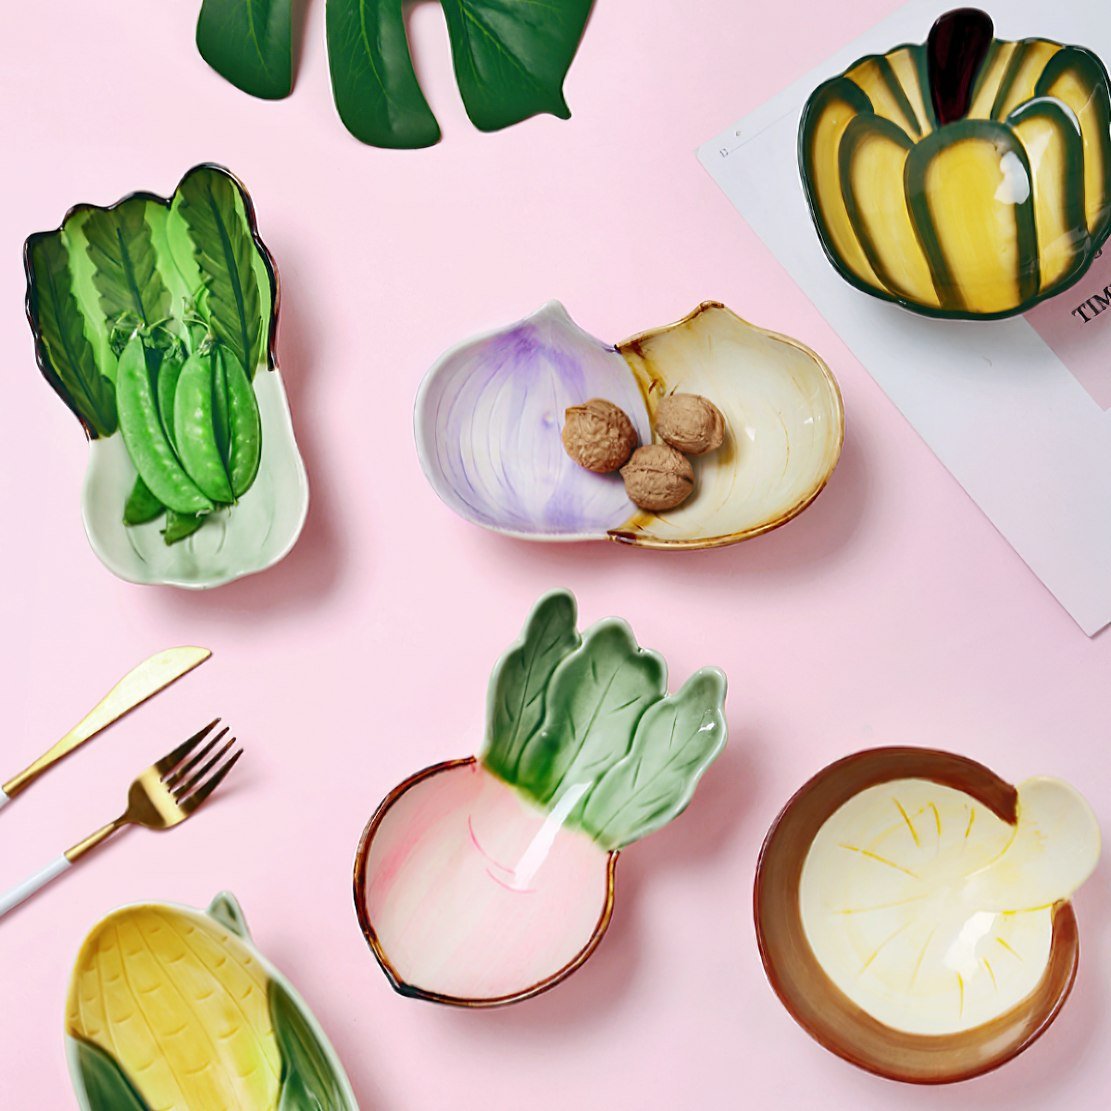 Colourful, ceramic, vegetable design tableware dishes